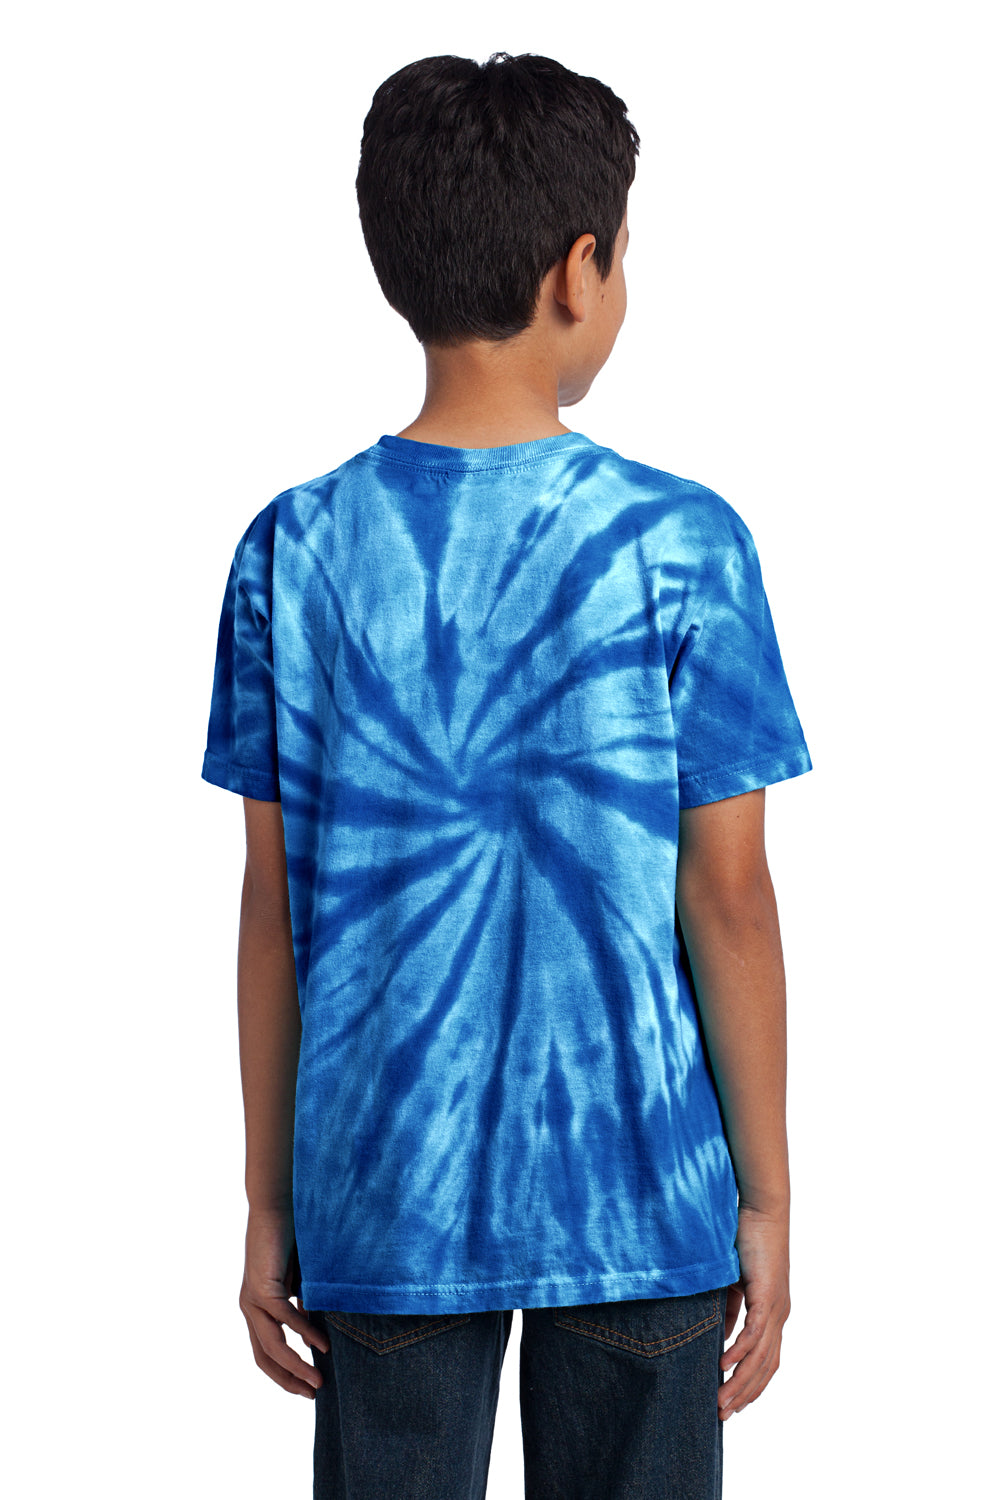 Port & Company PC147Y Youth Tie-Dye Short Sleeve Crewneck T-Shirt Royal Blue Back